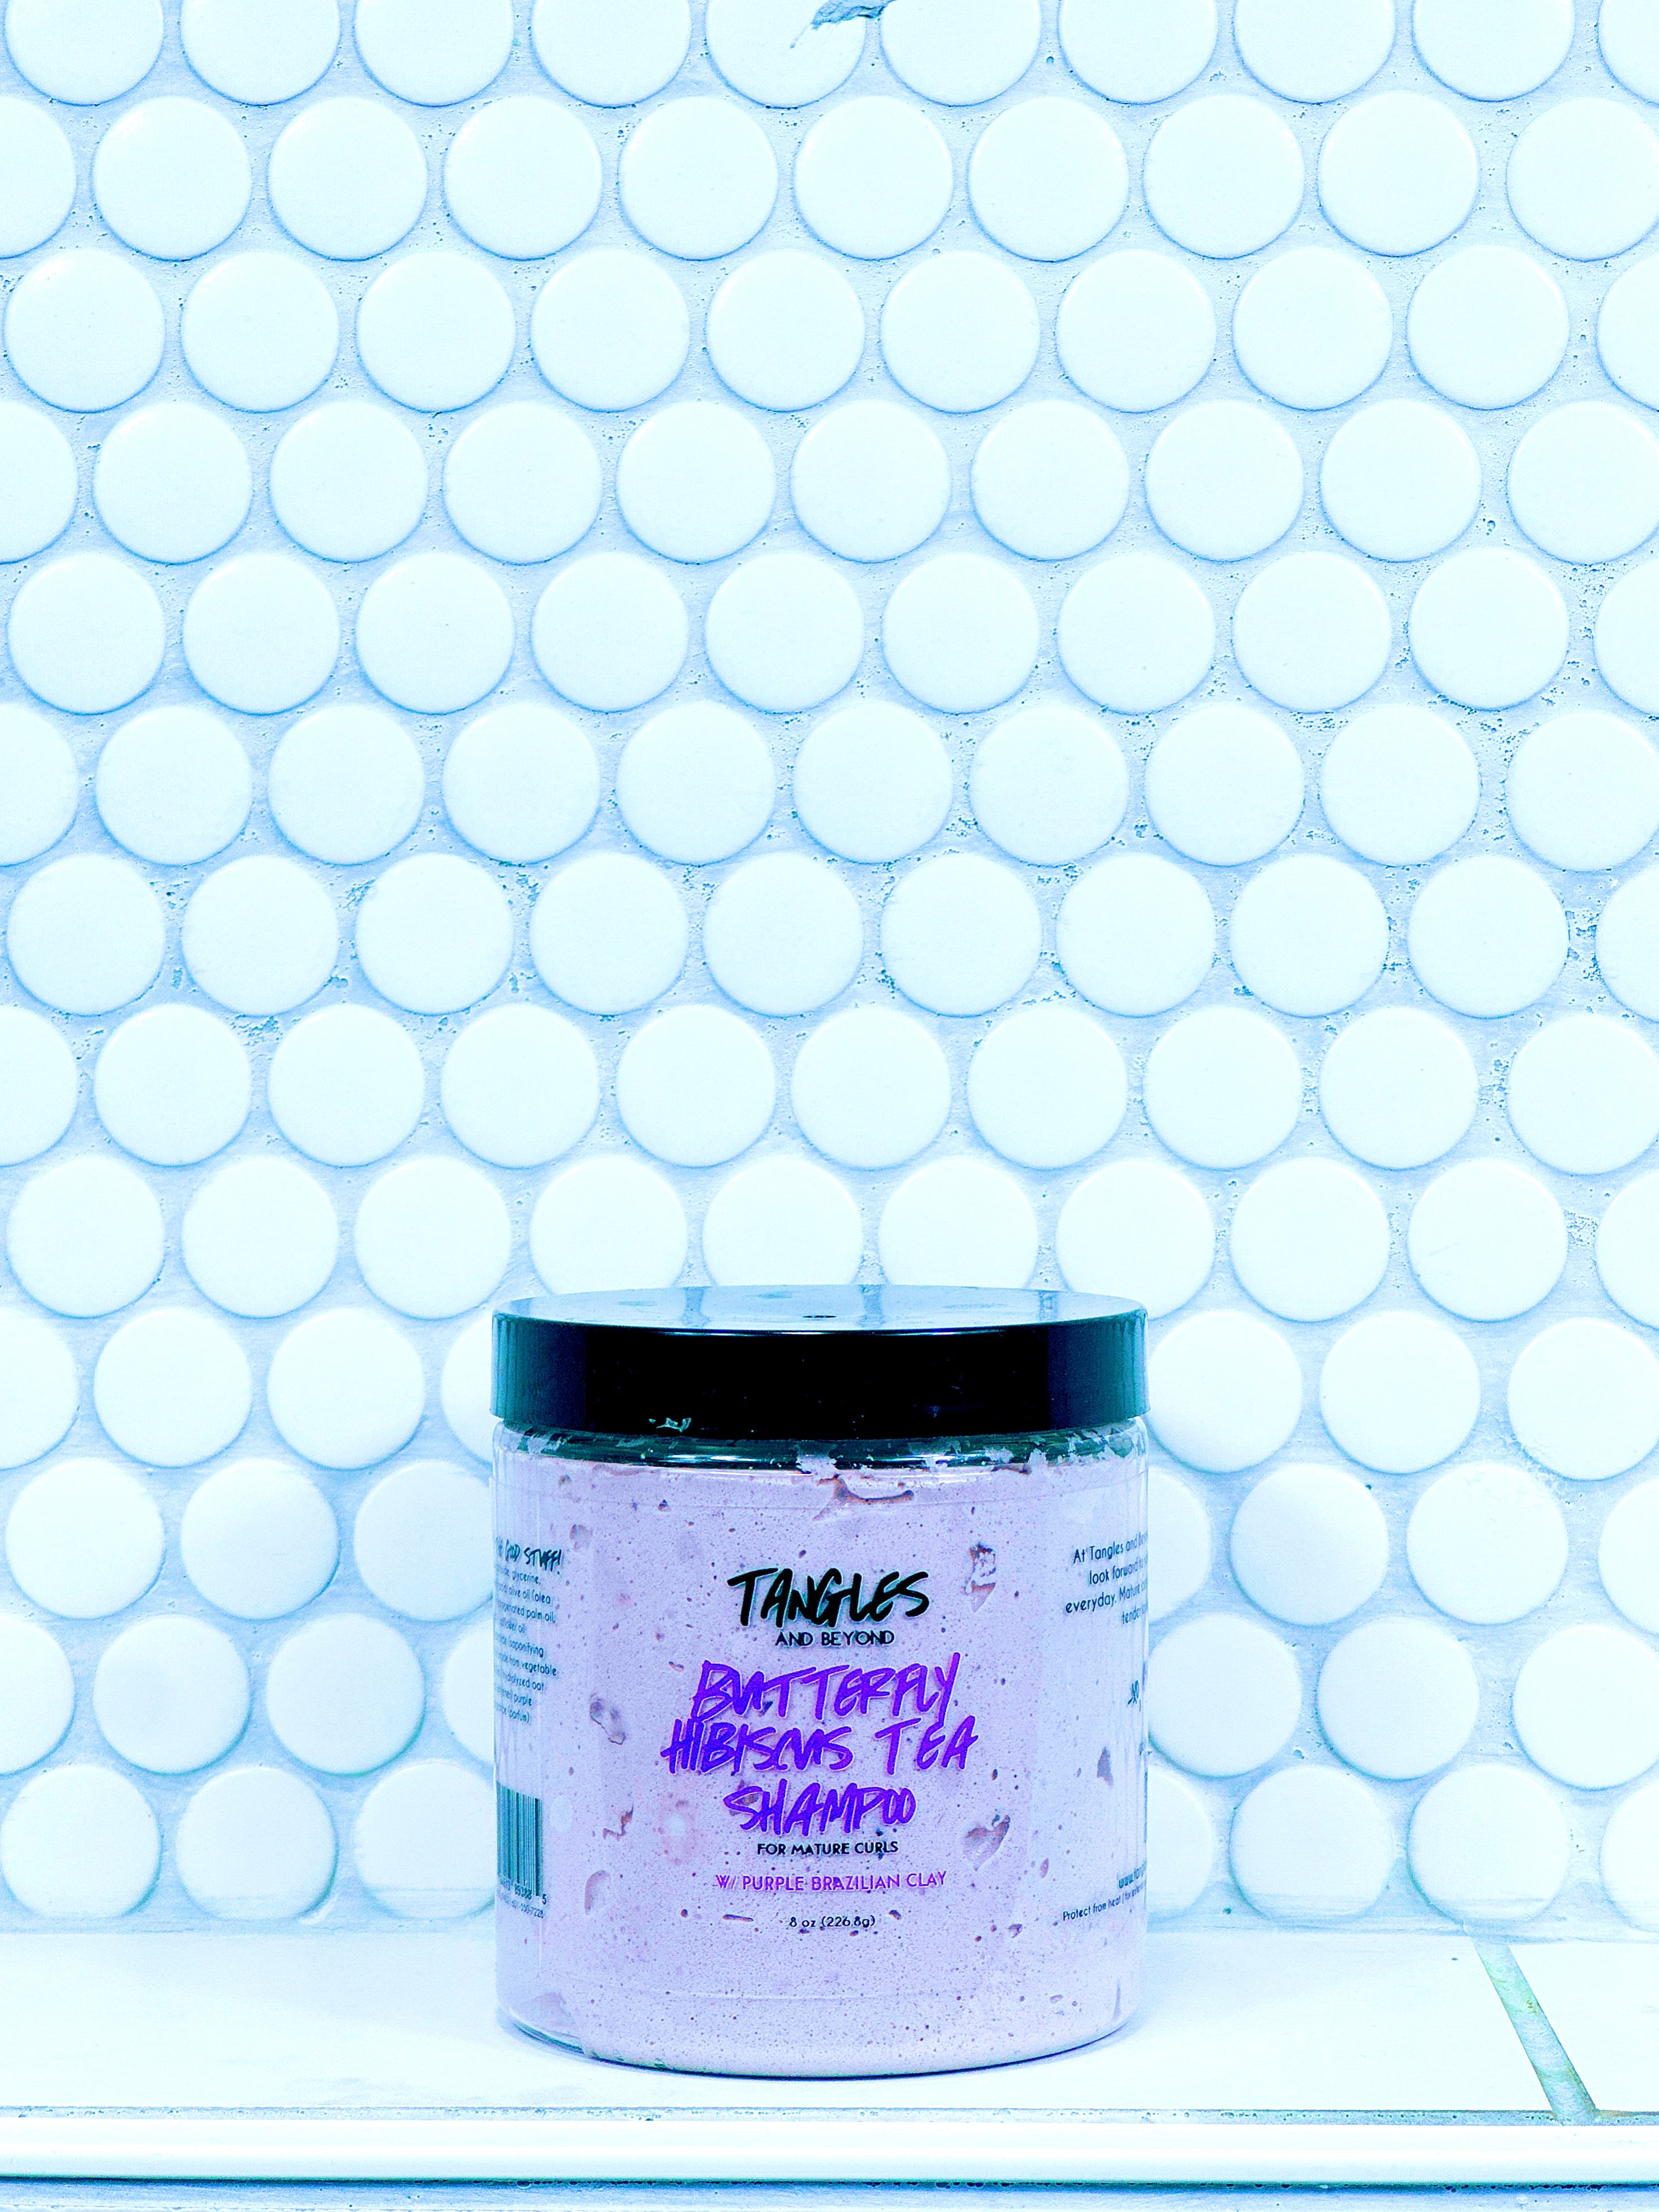 Butterfly Hibiscus Tea Shampoo w/ Purple Brazilian Clay for Mature Curls